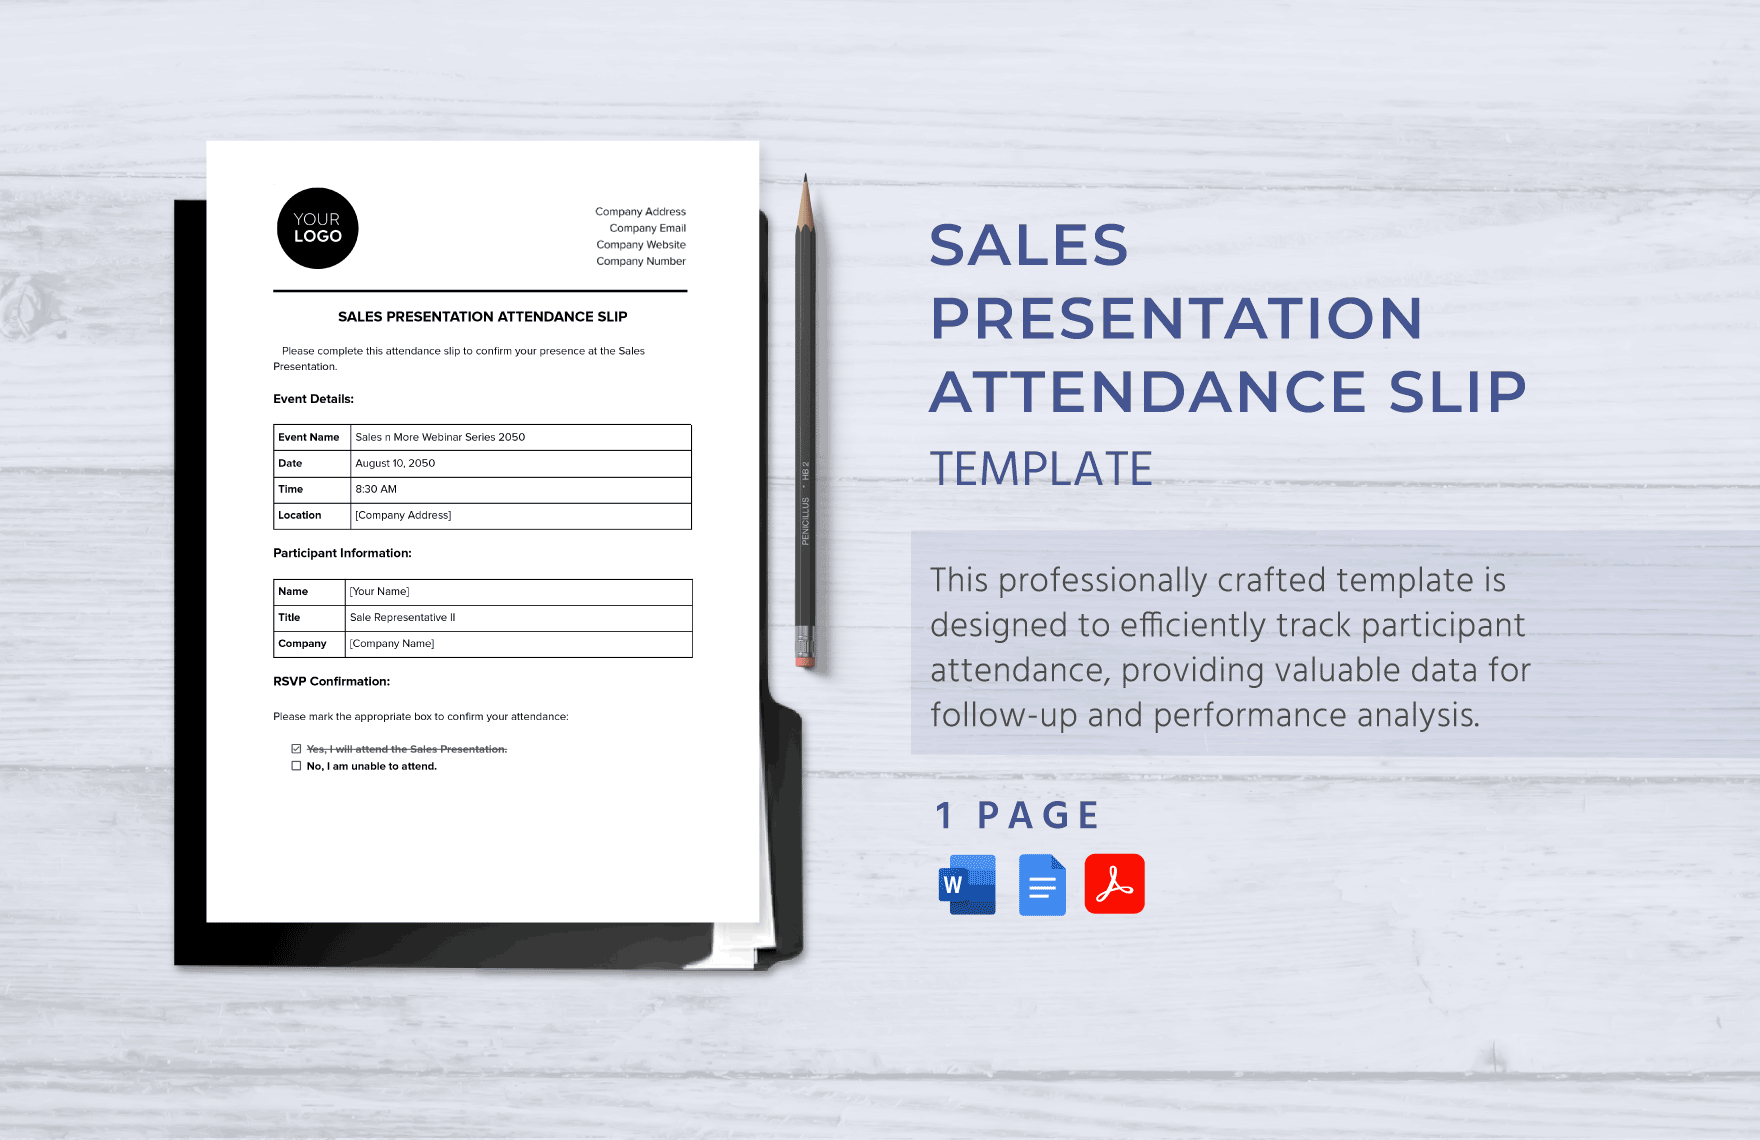 Sales Presentation Attendance Slip Template in Word, Google Docs, PDF